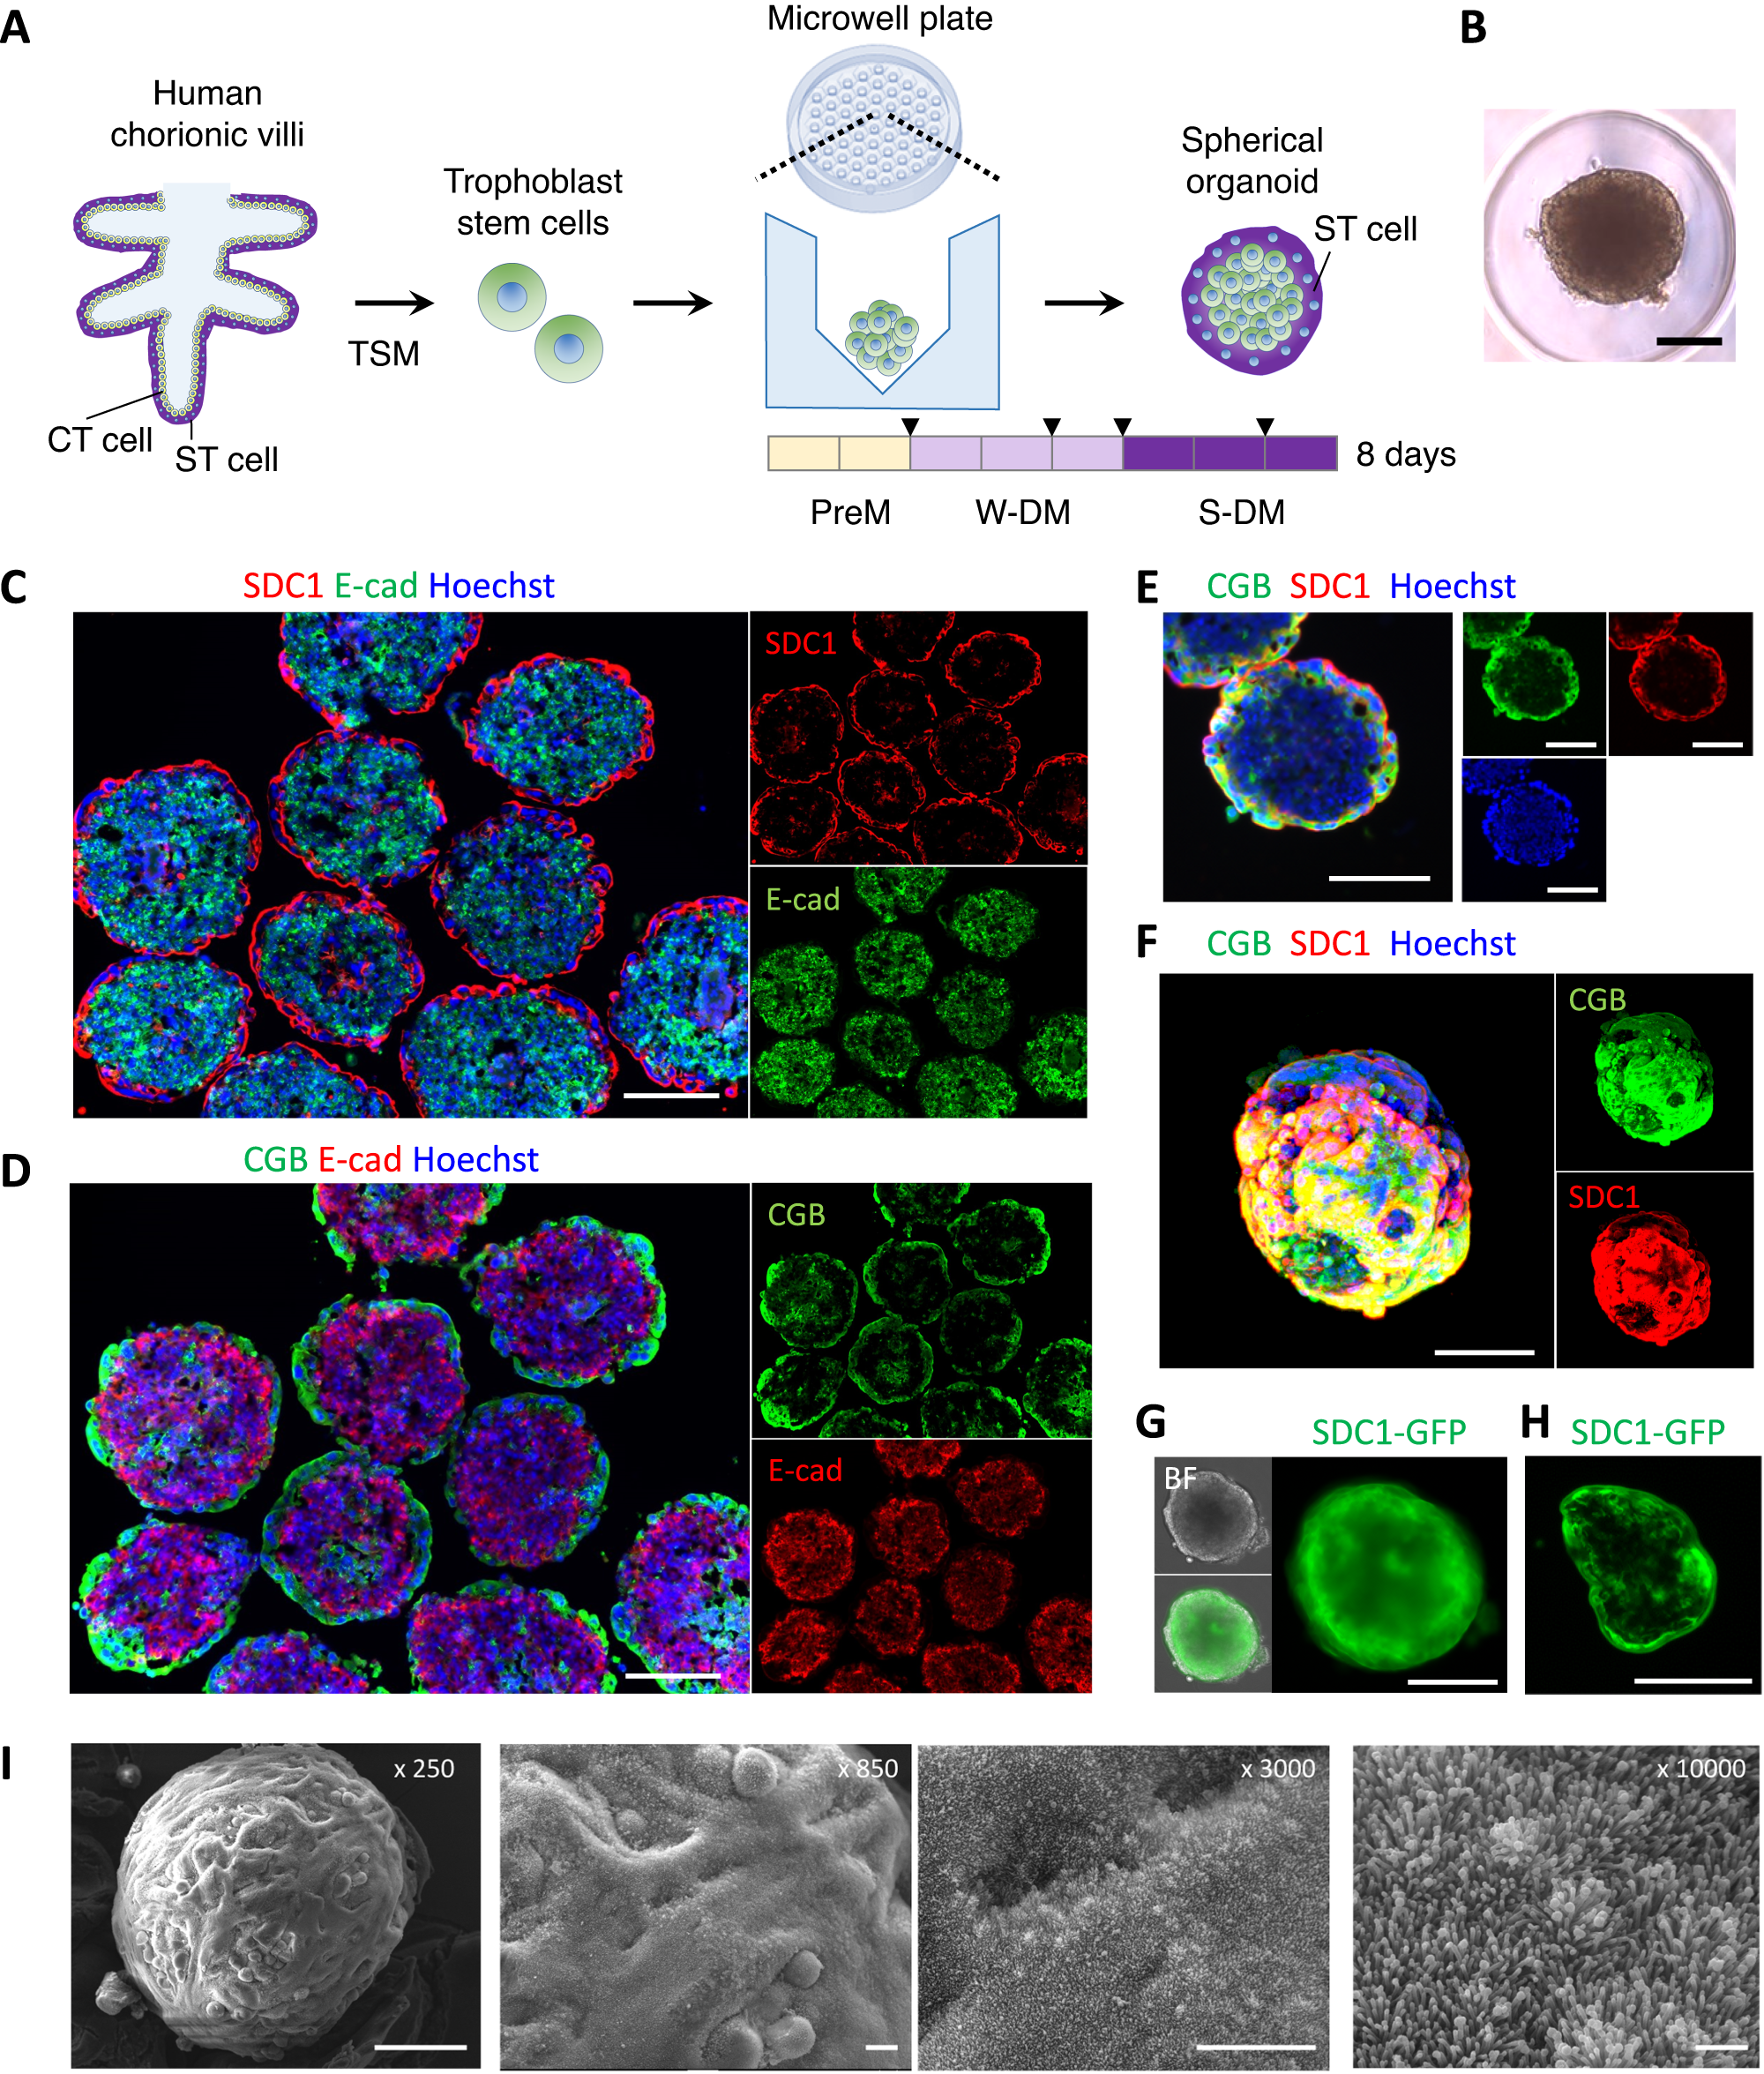 Trophoblast stem cell-based organoid models of the human placental